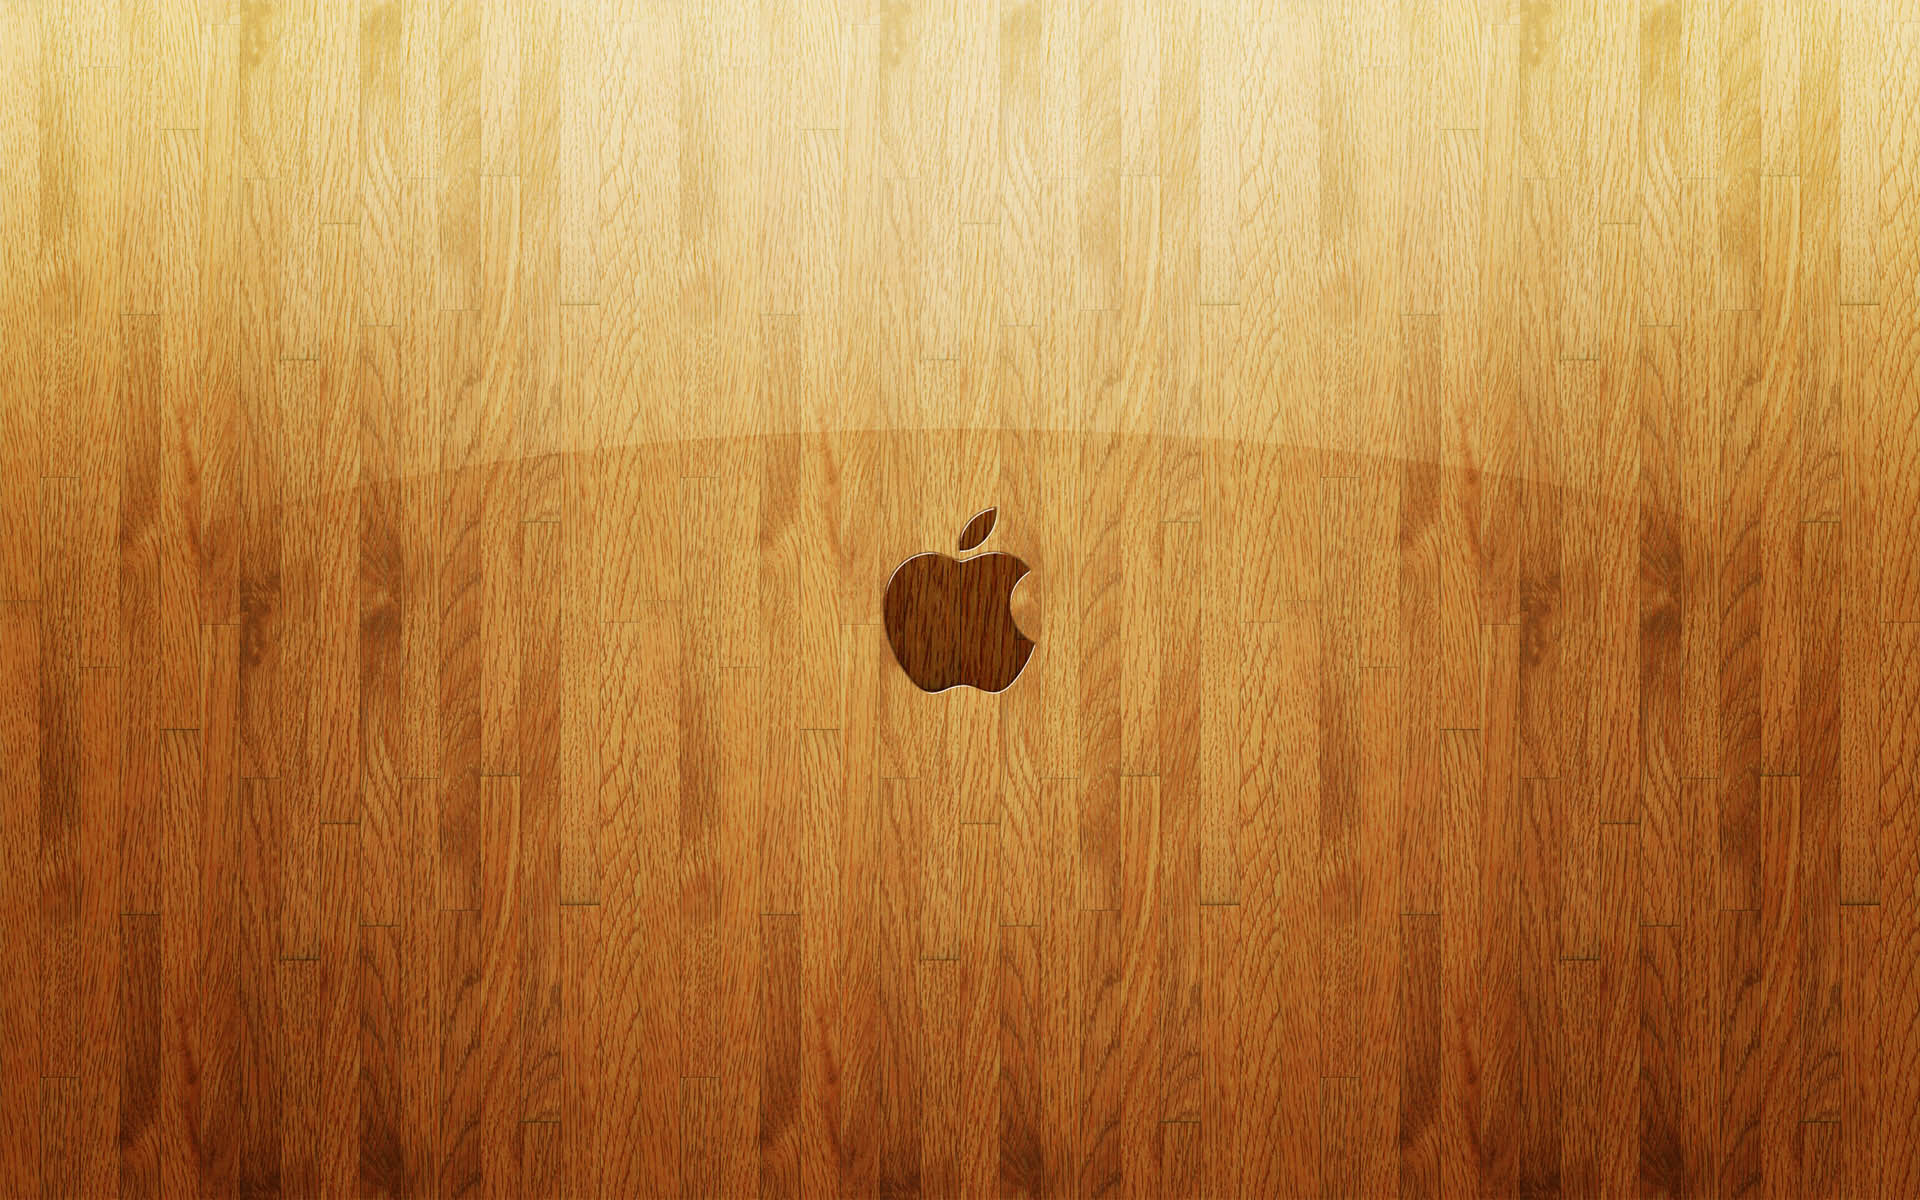 Apple Wooden Glass Wallpaper HD